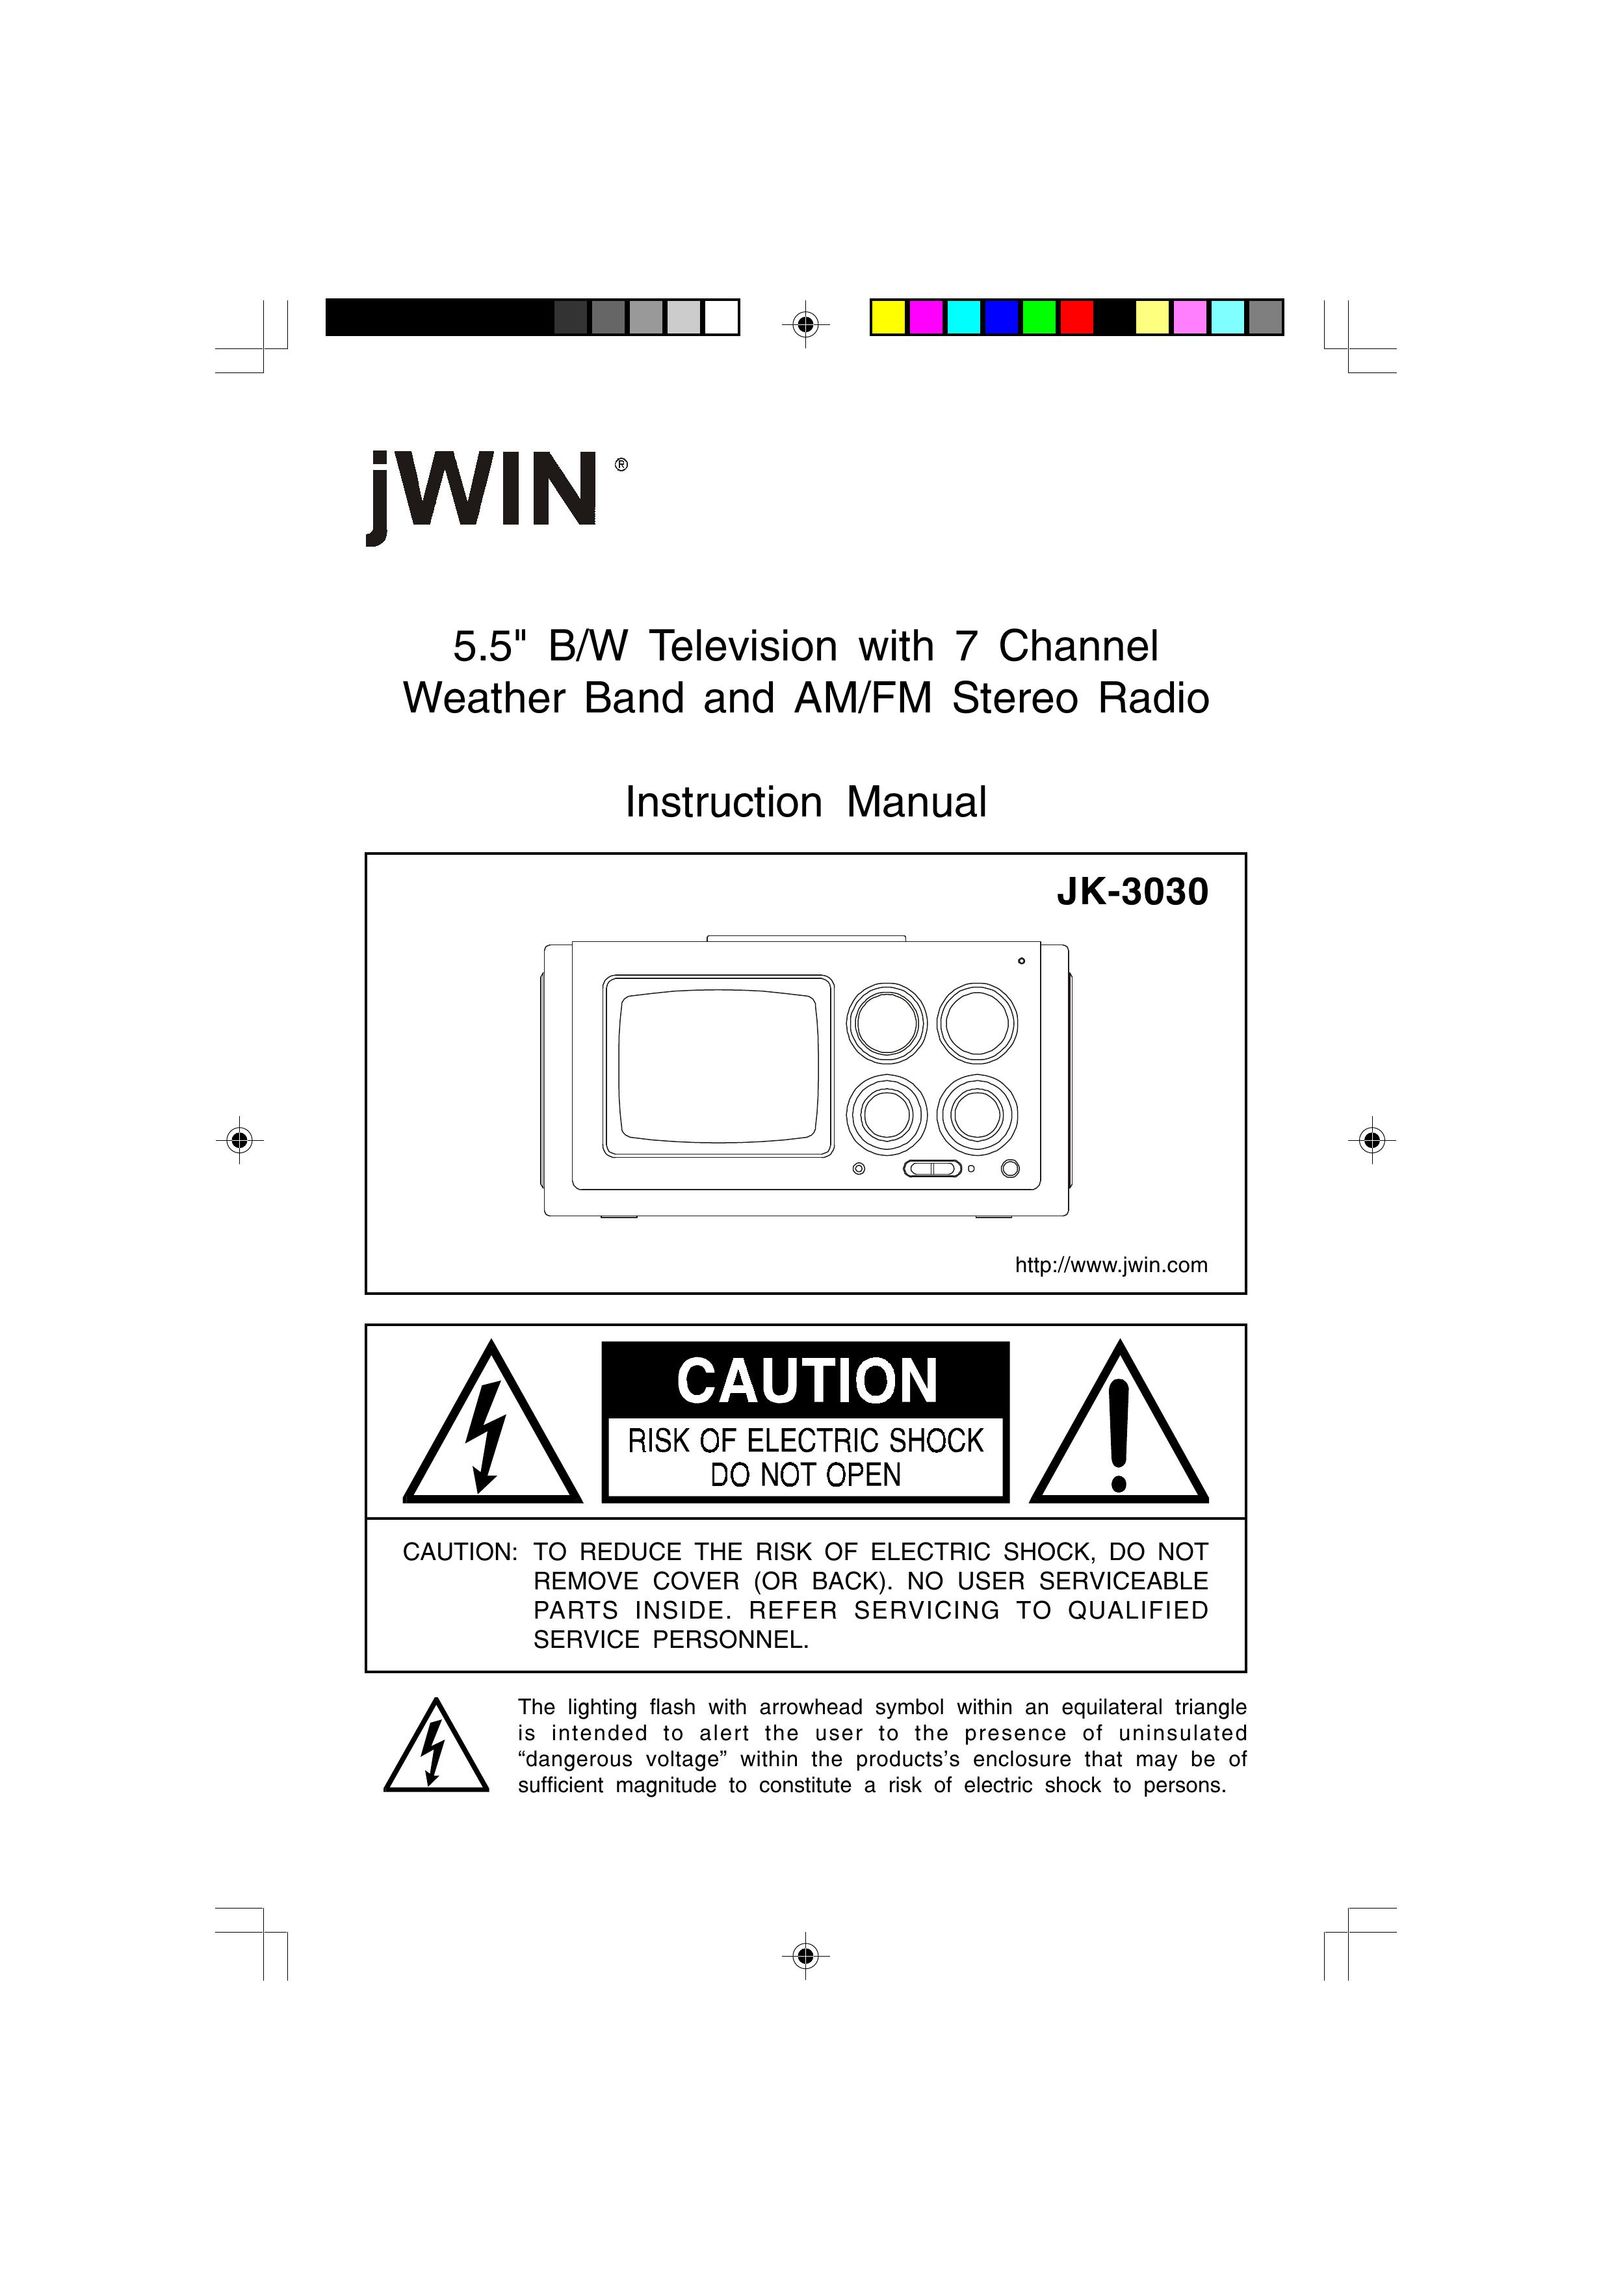 Jwin jk-3030 Intercom System User Manual